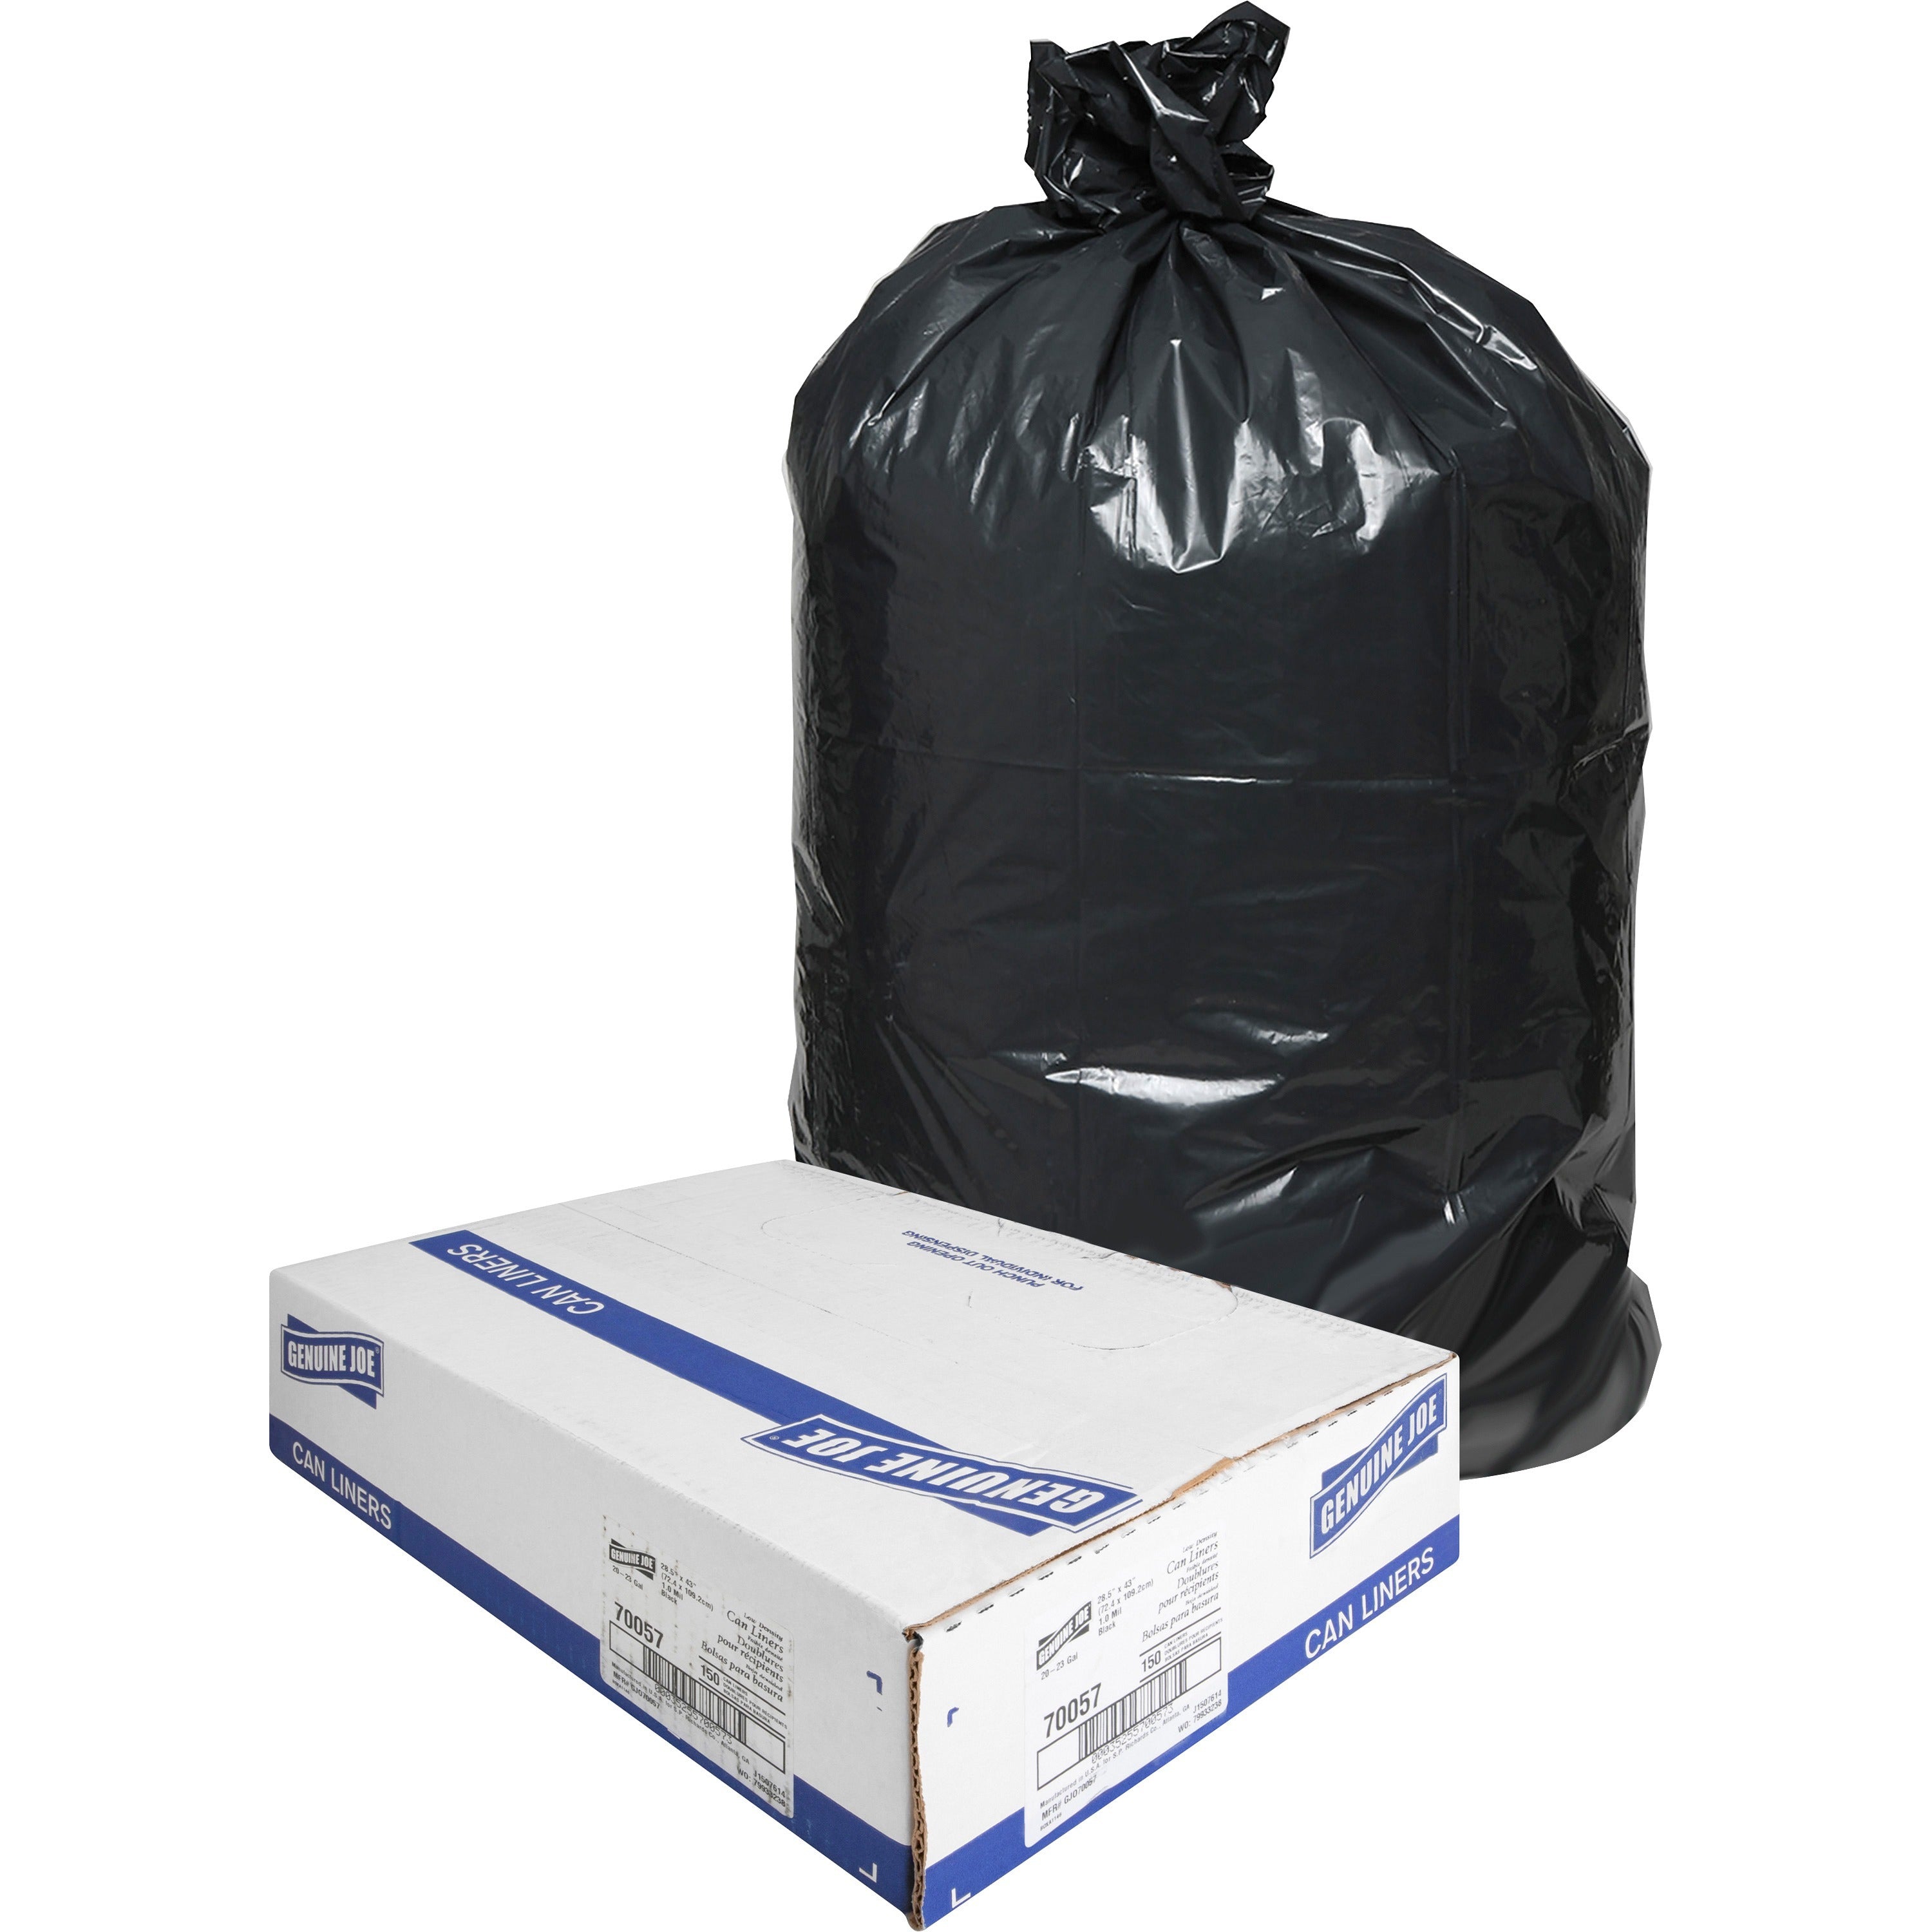 genuine-joe-slim-jim-23-gallon-can-liners-medium-size-23-gal-capacity-2850-width-x-43-length-low-density-black-1-carton-150-per-box-office-waste-food-recycled_gjo70057 - 1